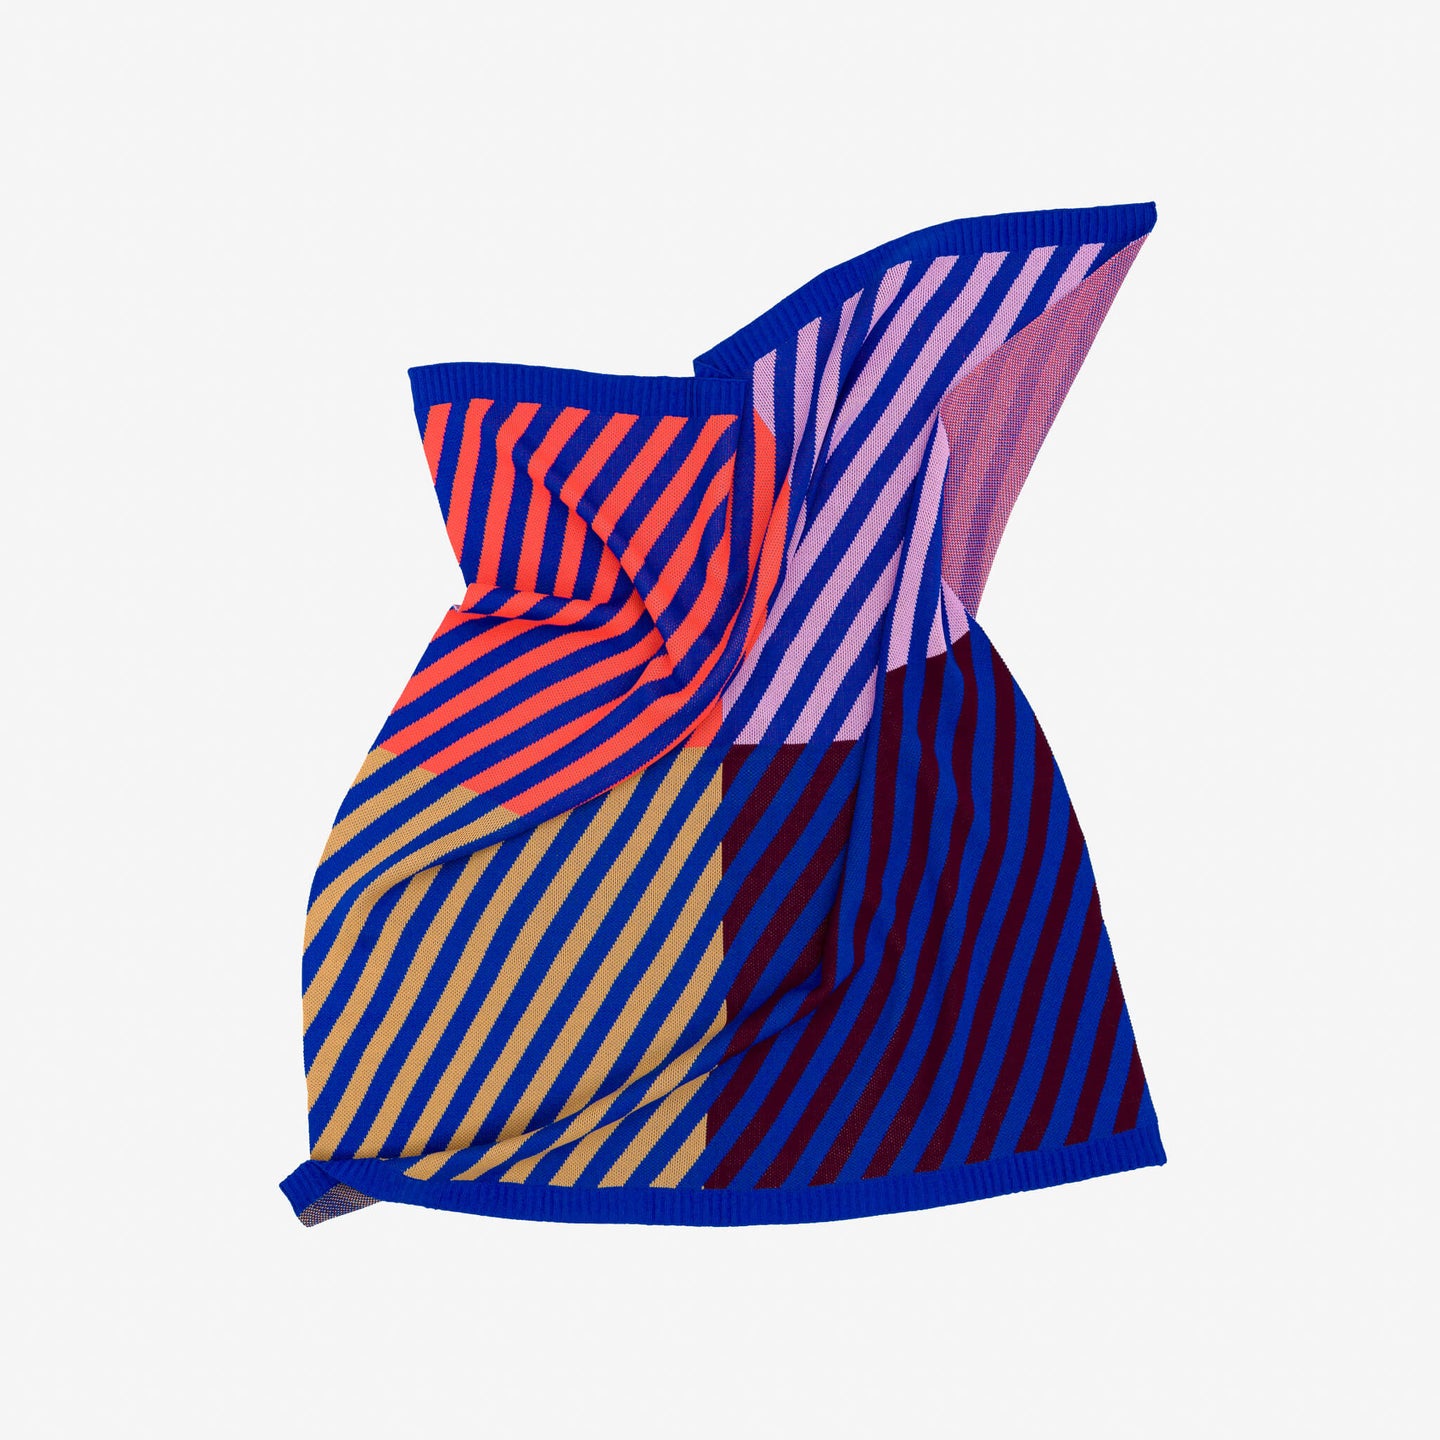 Quattro Stripe Colorful Knit Throw Blanket Verloop